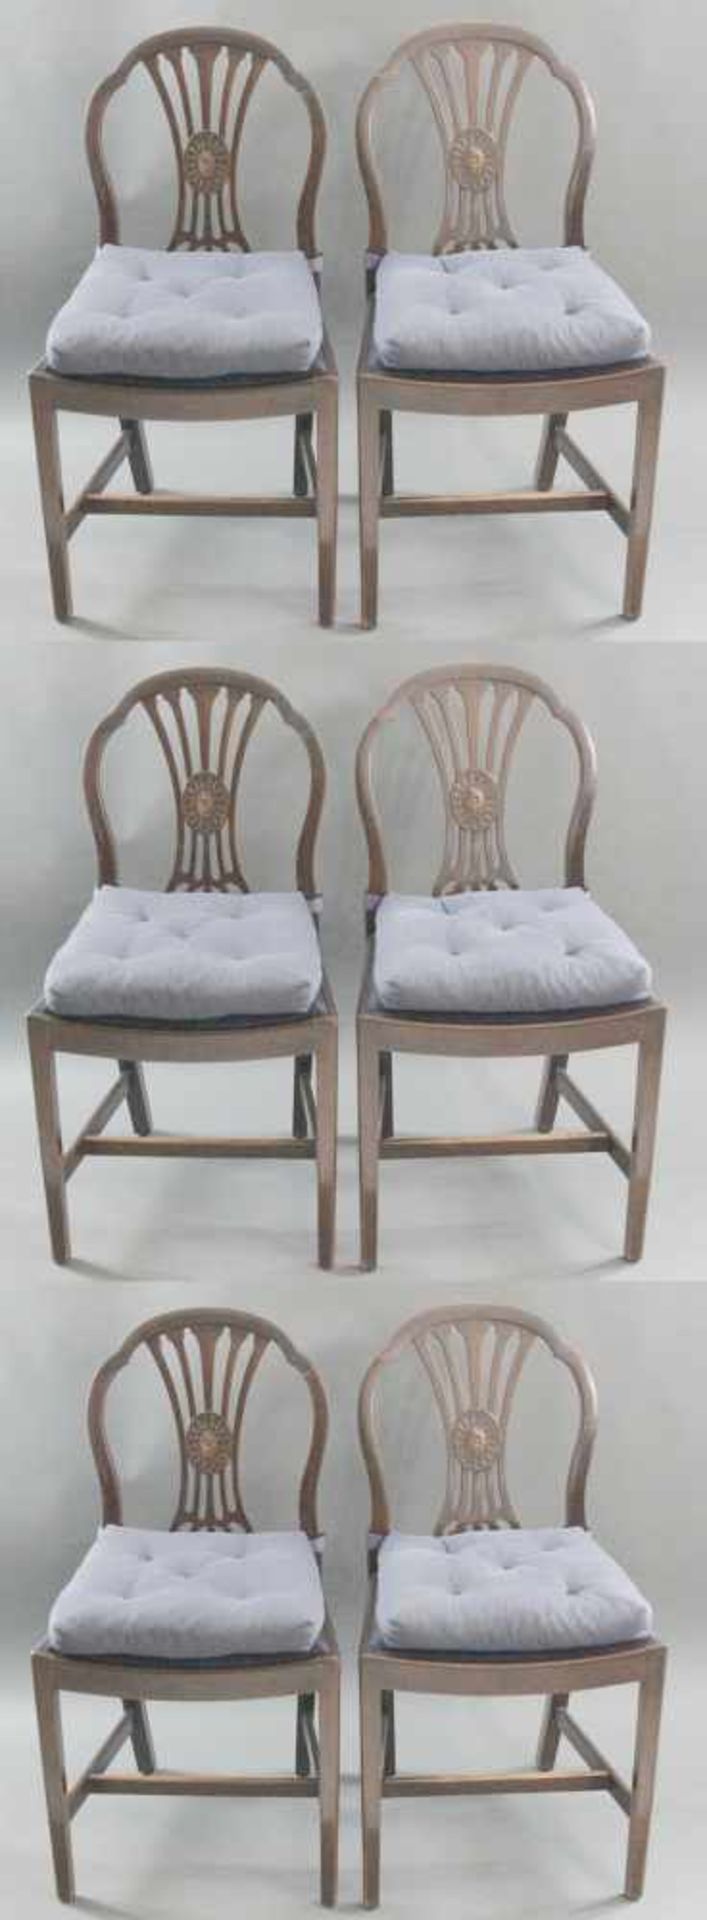 6 Regency - Stühle, Mahagoni, England, um 1820, gesproste Rückenlehne, mittig mit großer Rosette,